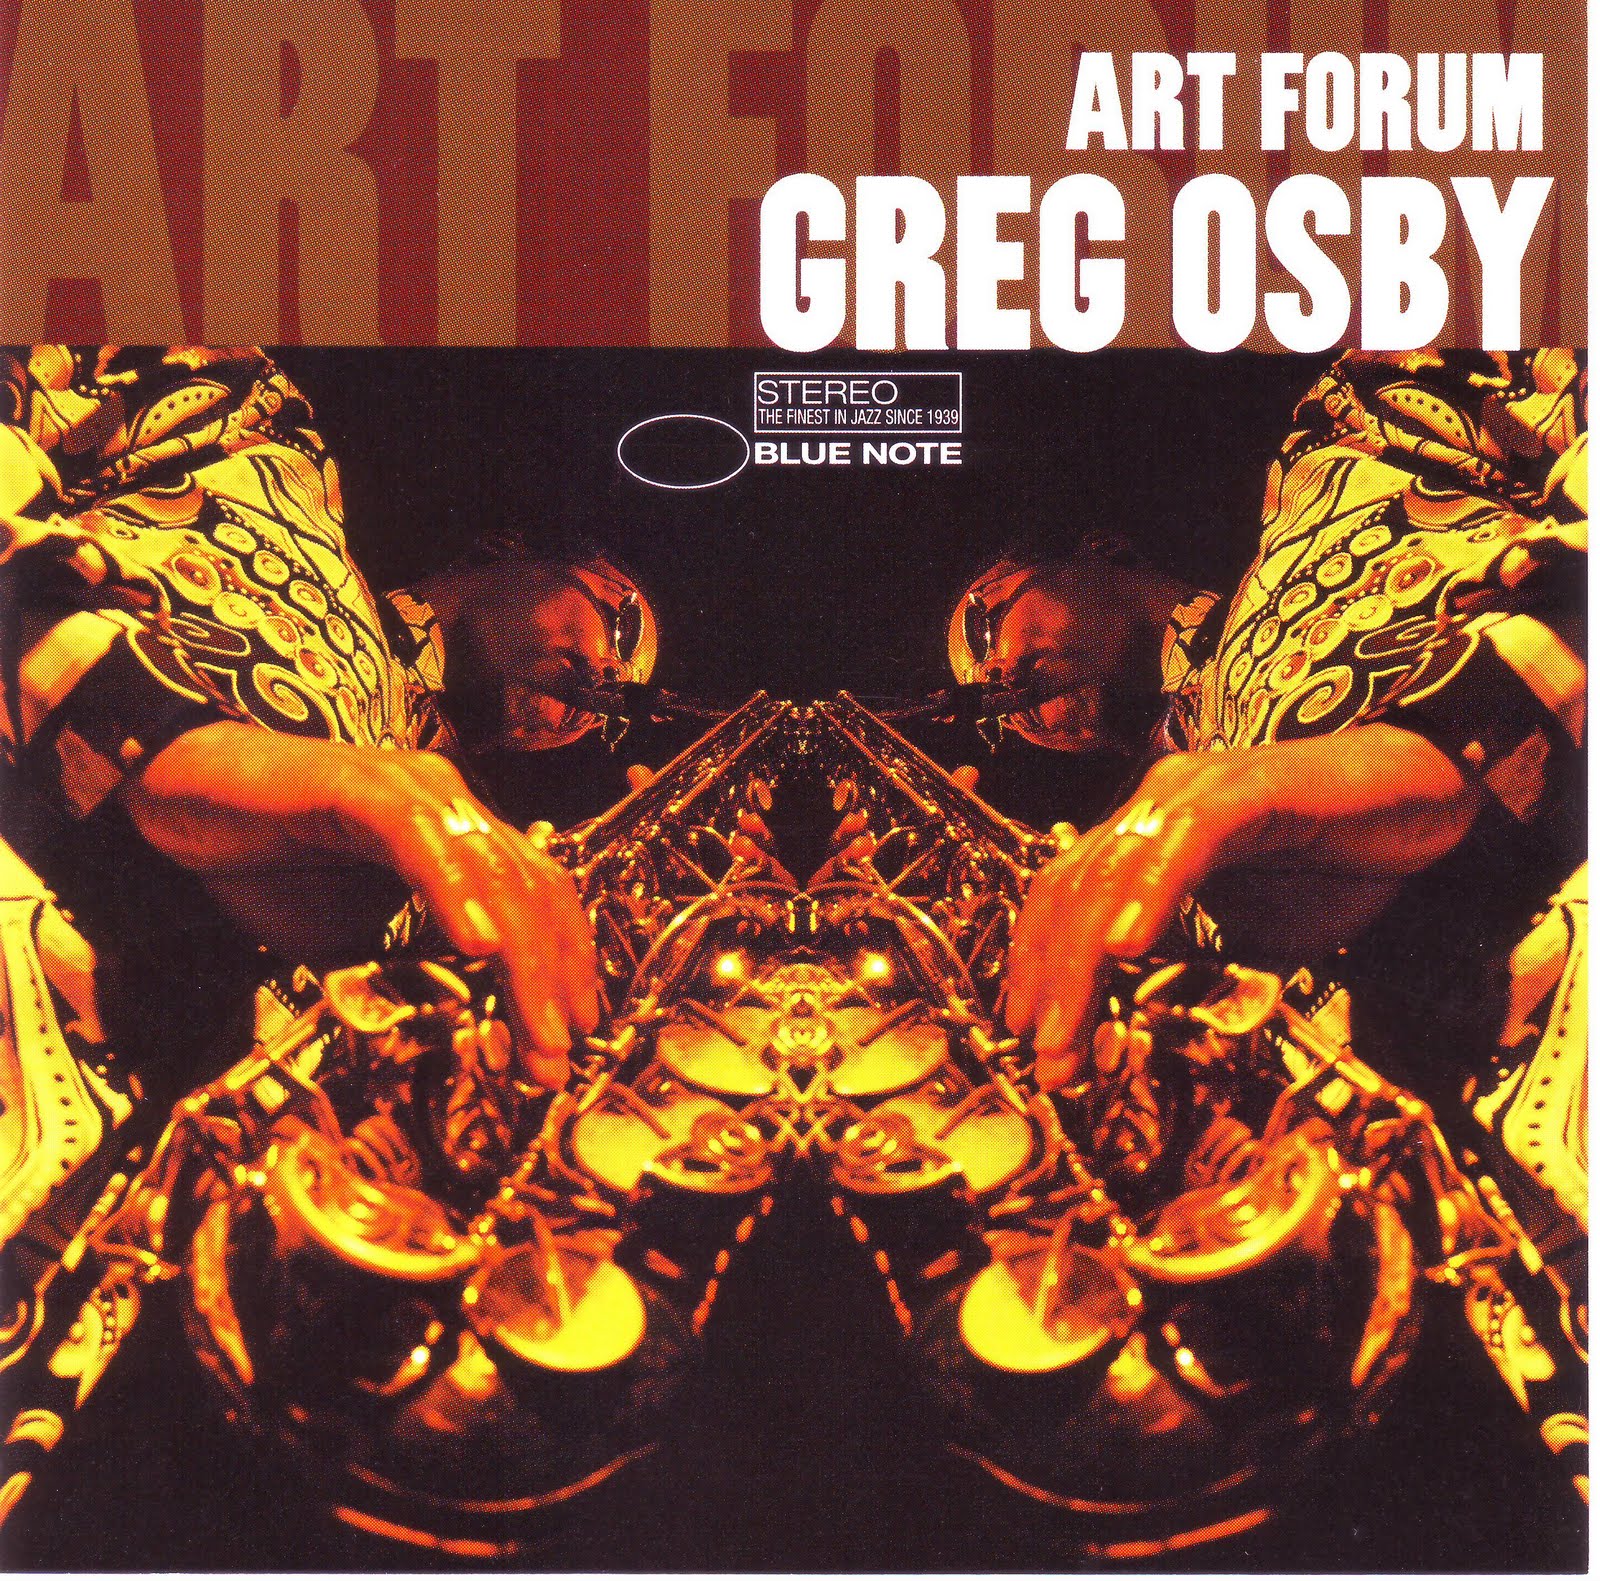 GREG OSBY - Art Forum cover 